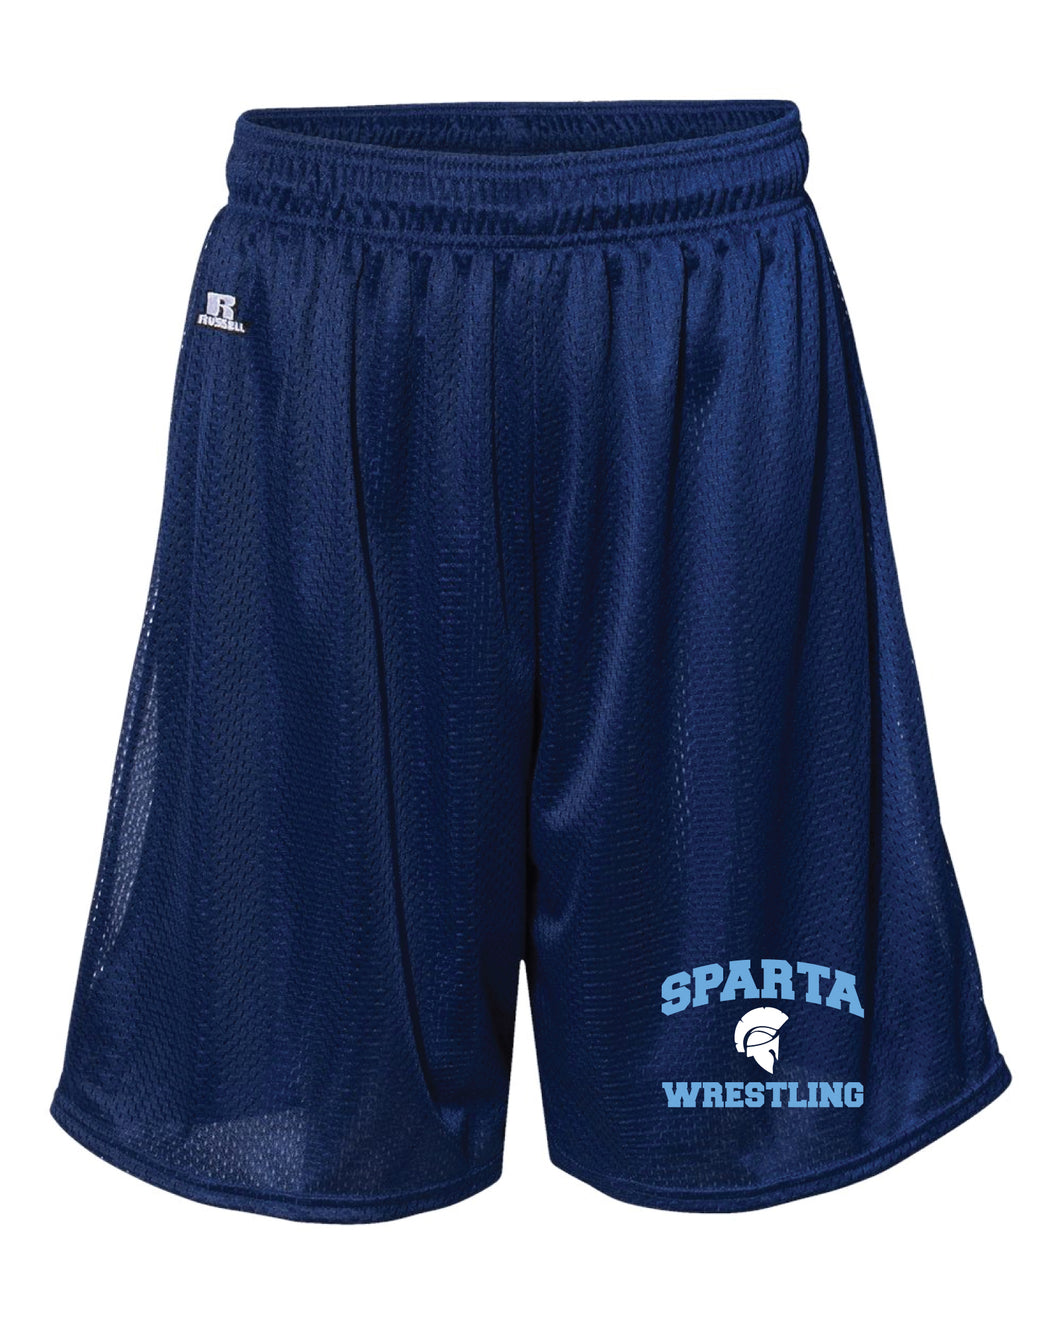 Sparta HS Wrestling Russell Athletic Tech Shorts - Navy - 5KounT2018